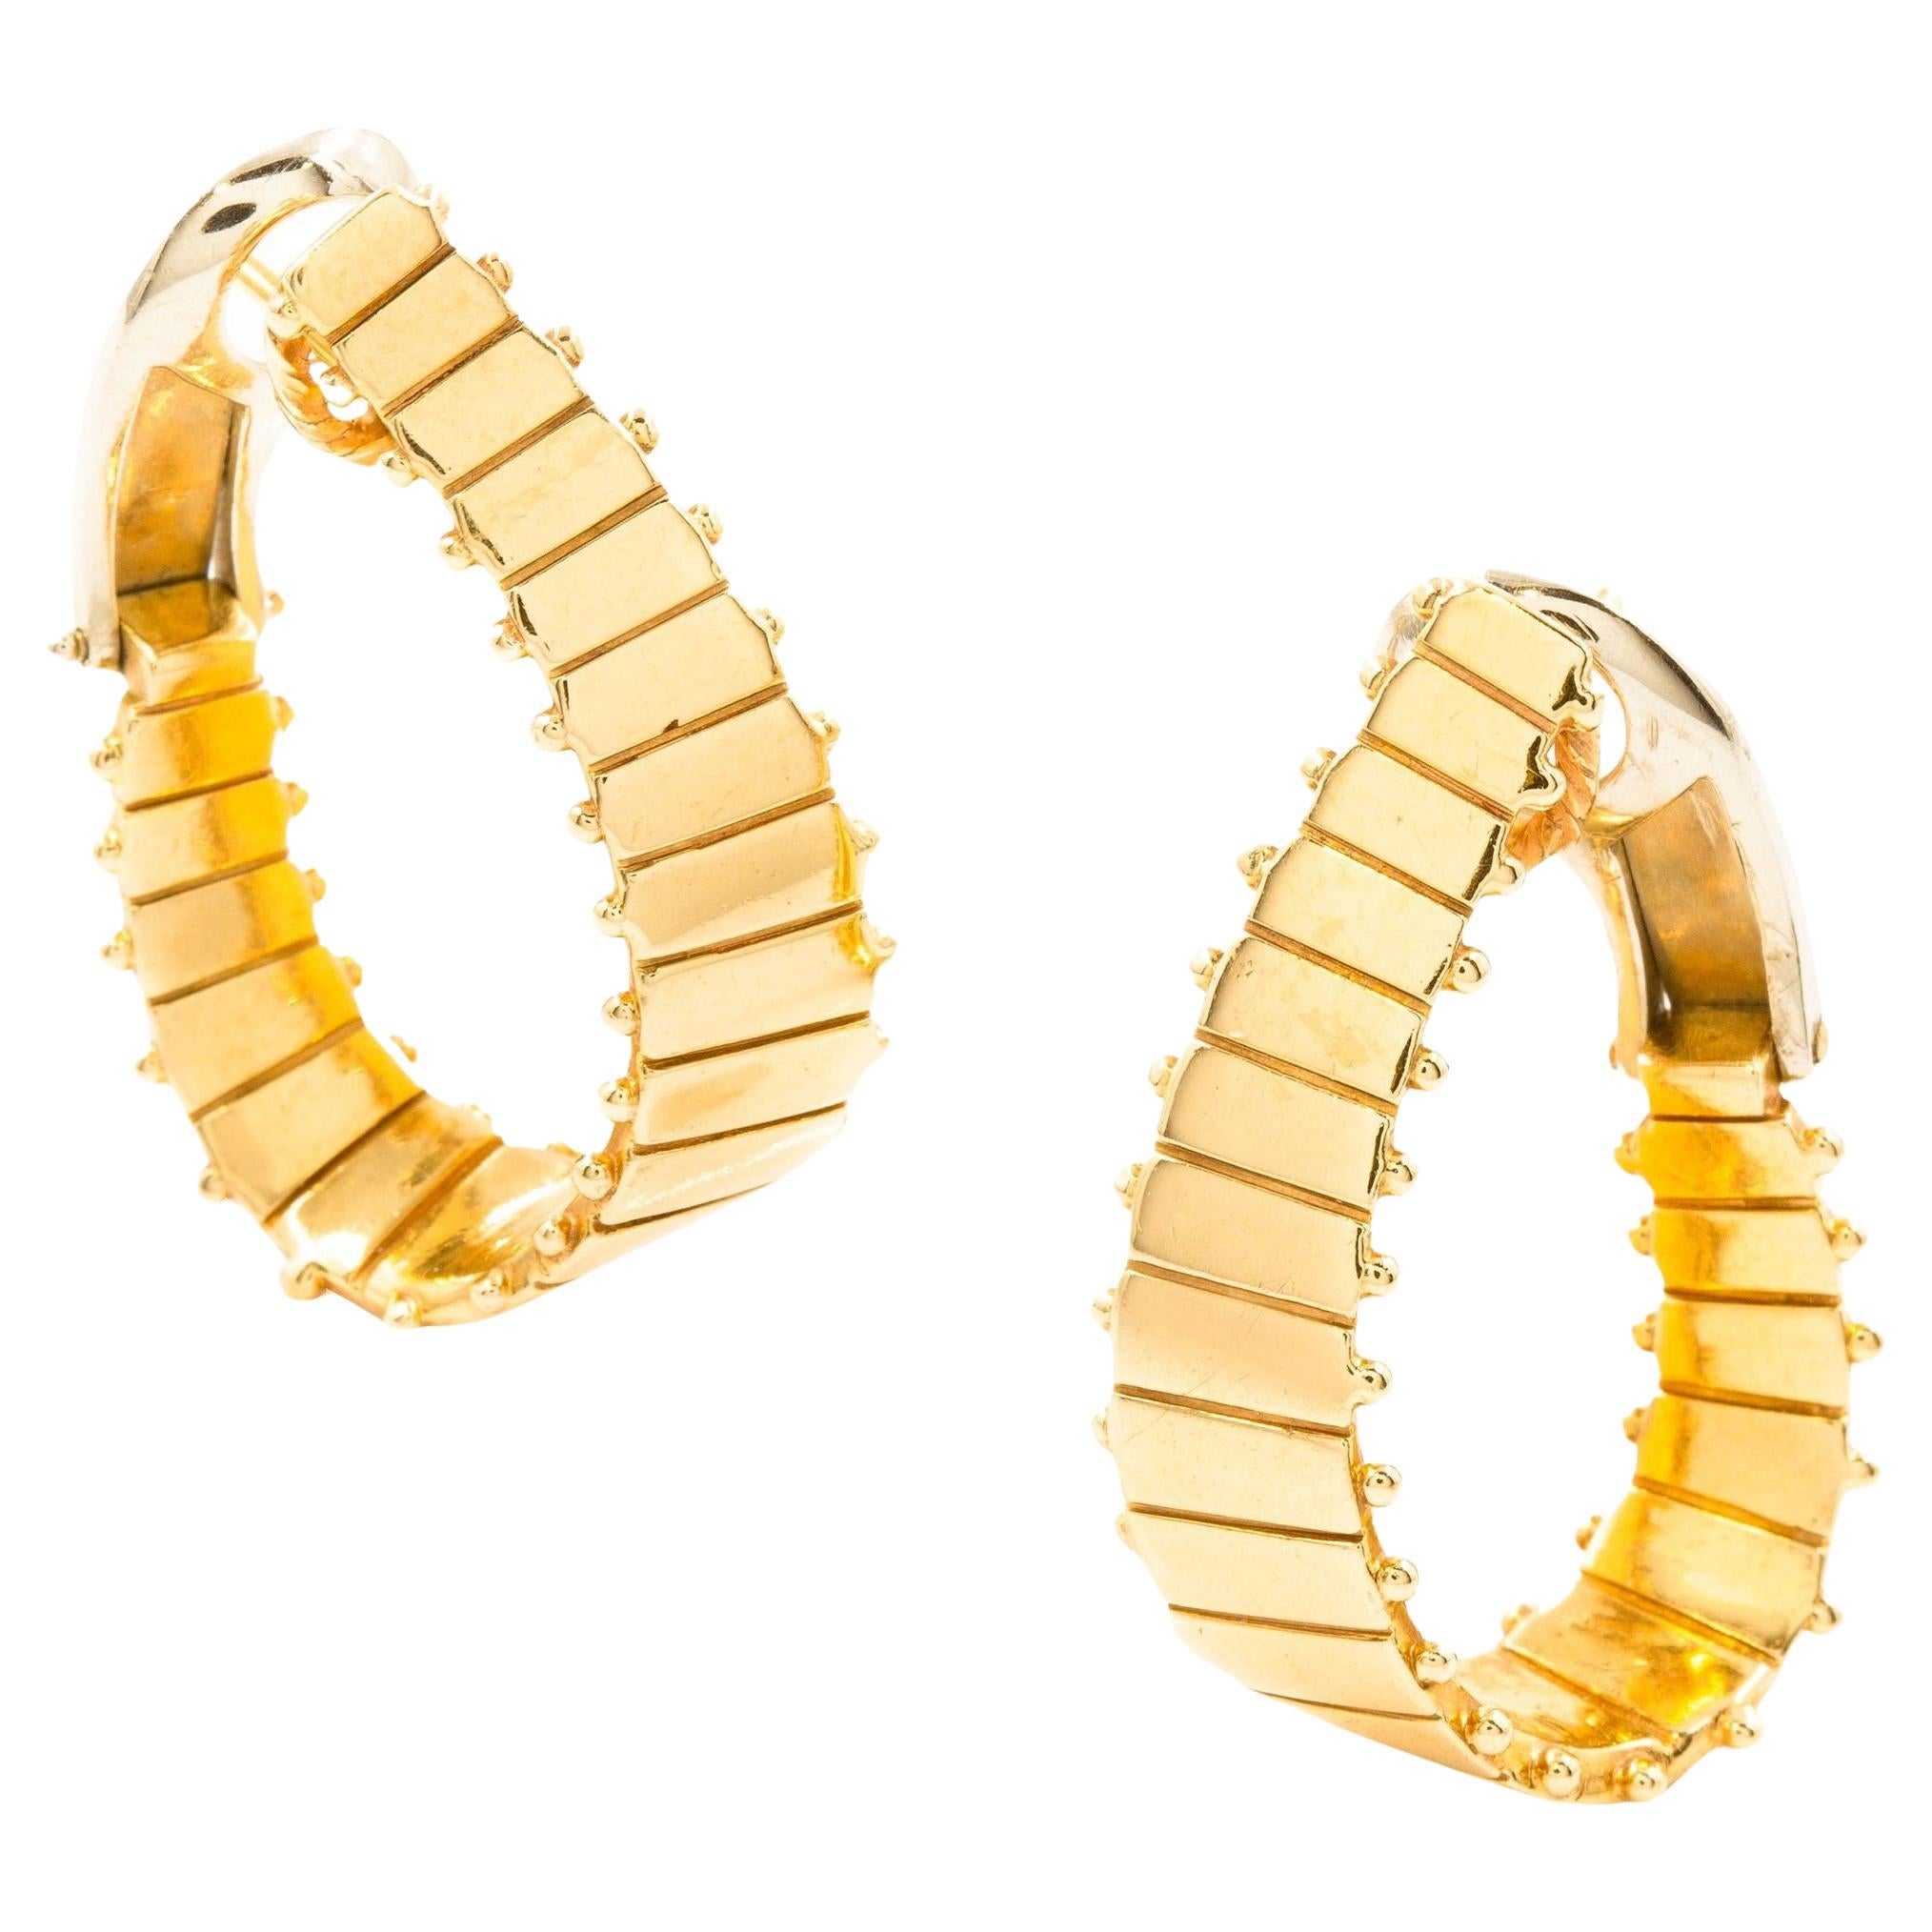 Vintage Pair of 14k Yellow Gold Ridged-Hoop Earrings w/ Omega Clips